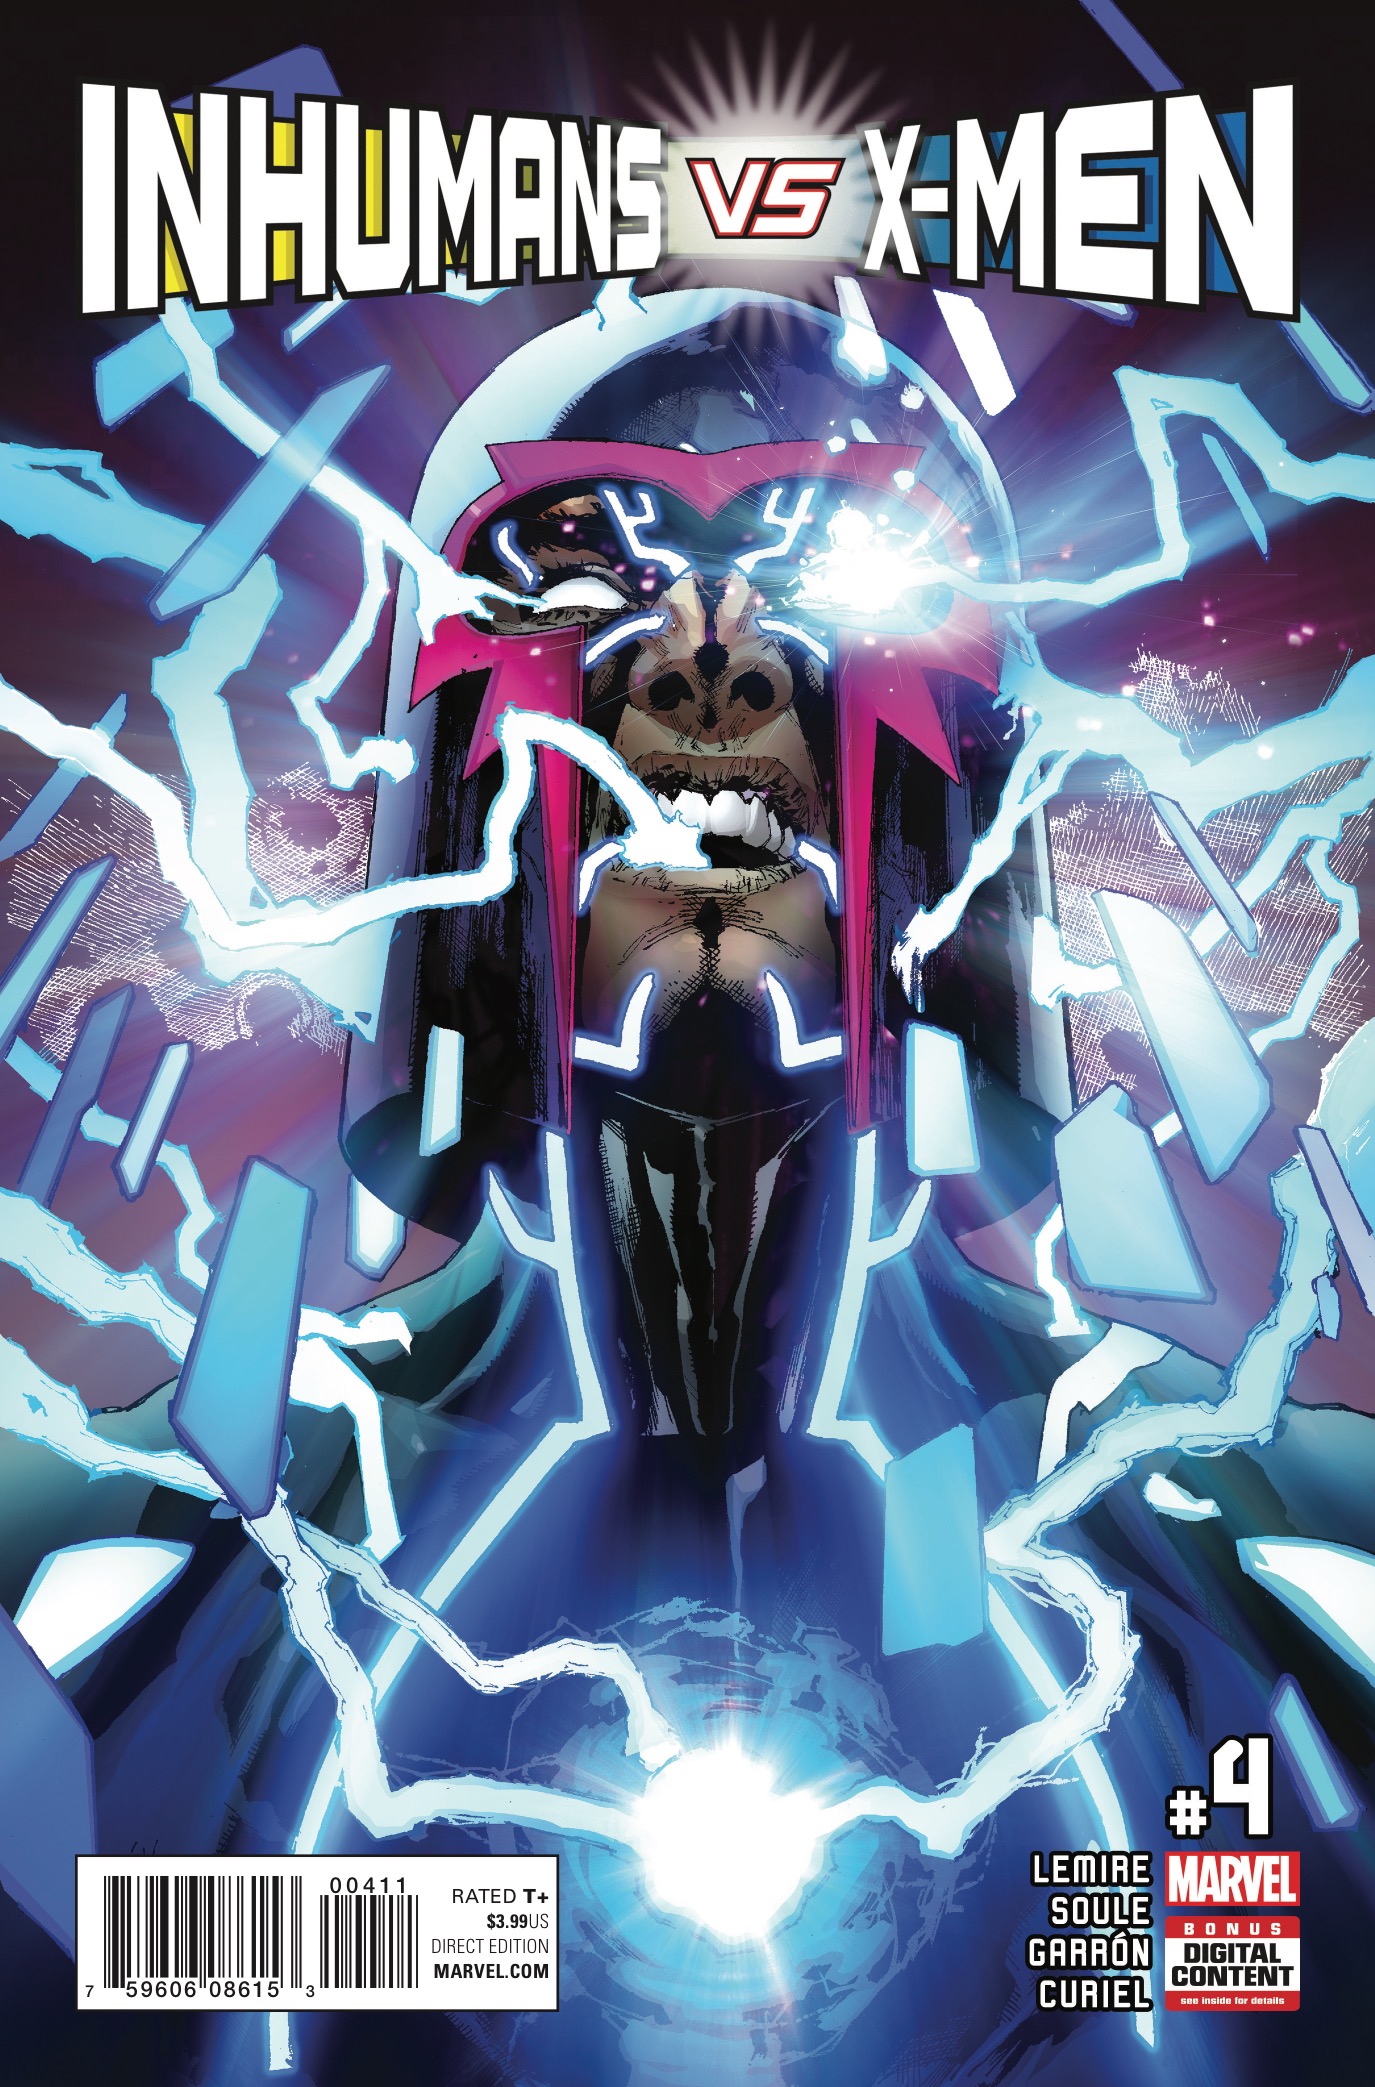 Inhumans Vs. X-Men #4 Review